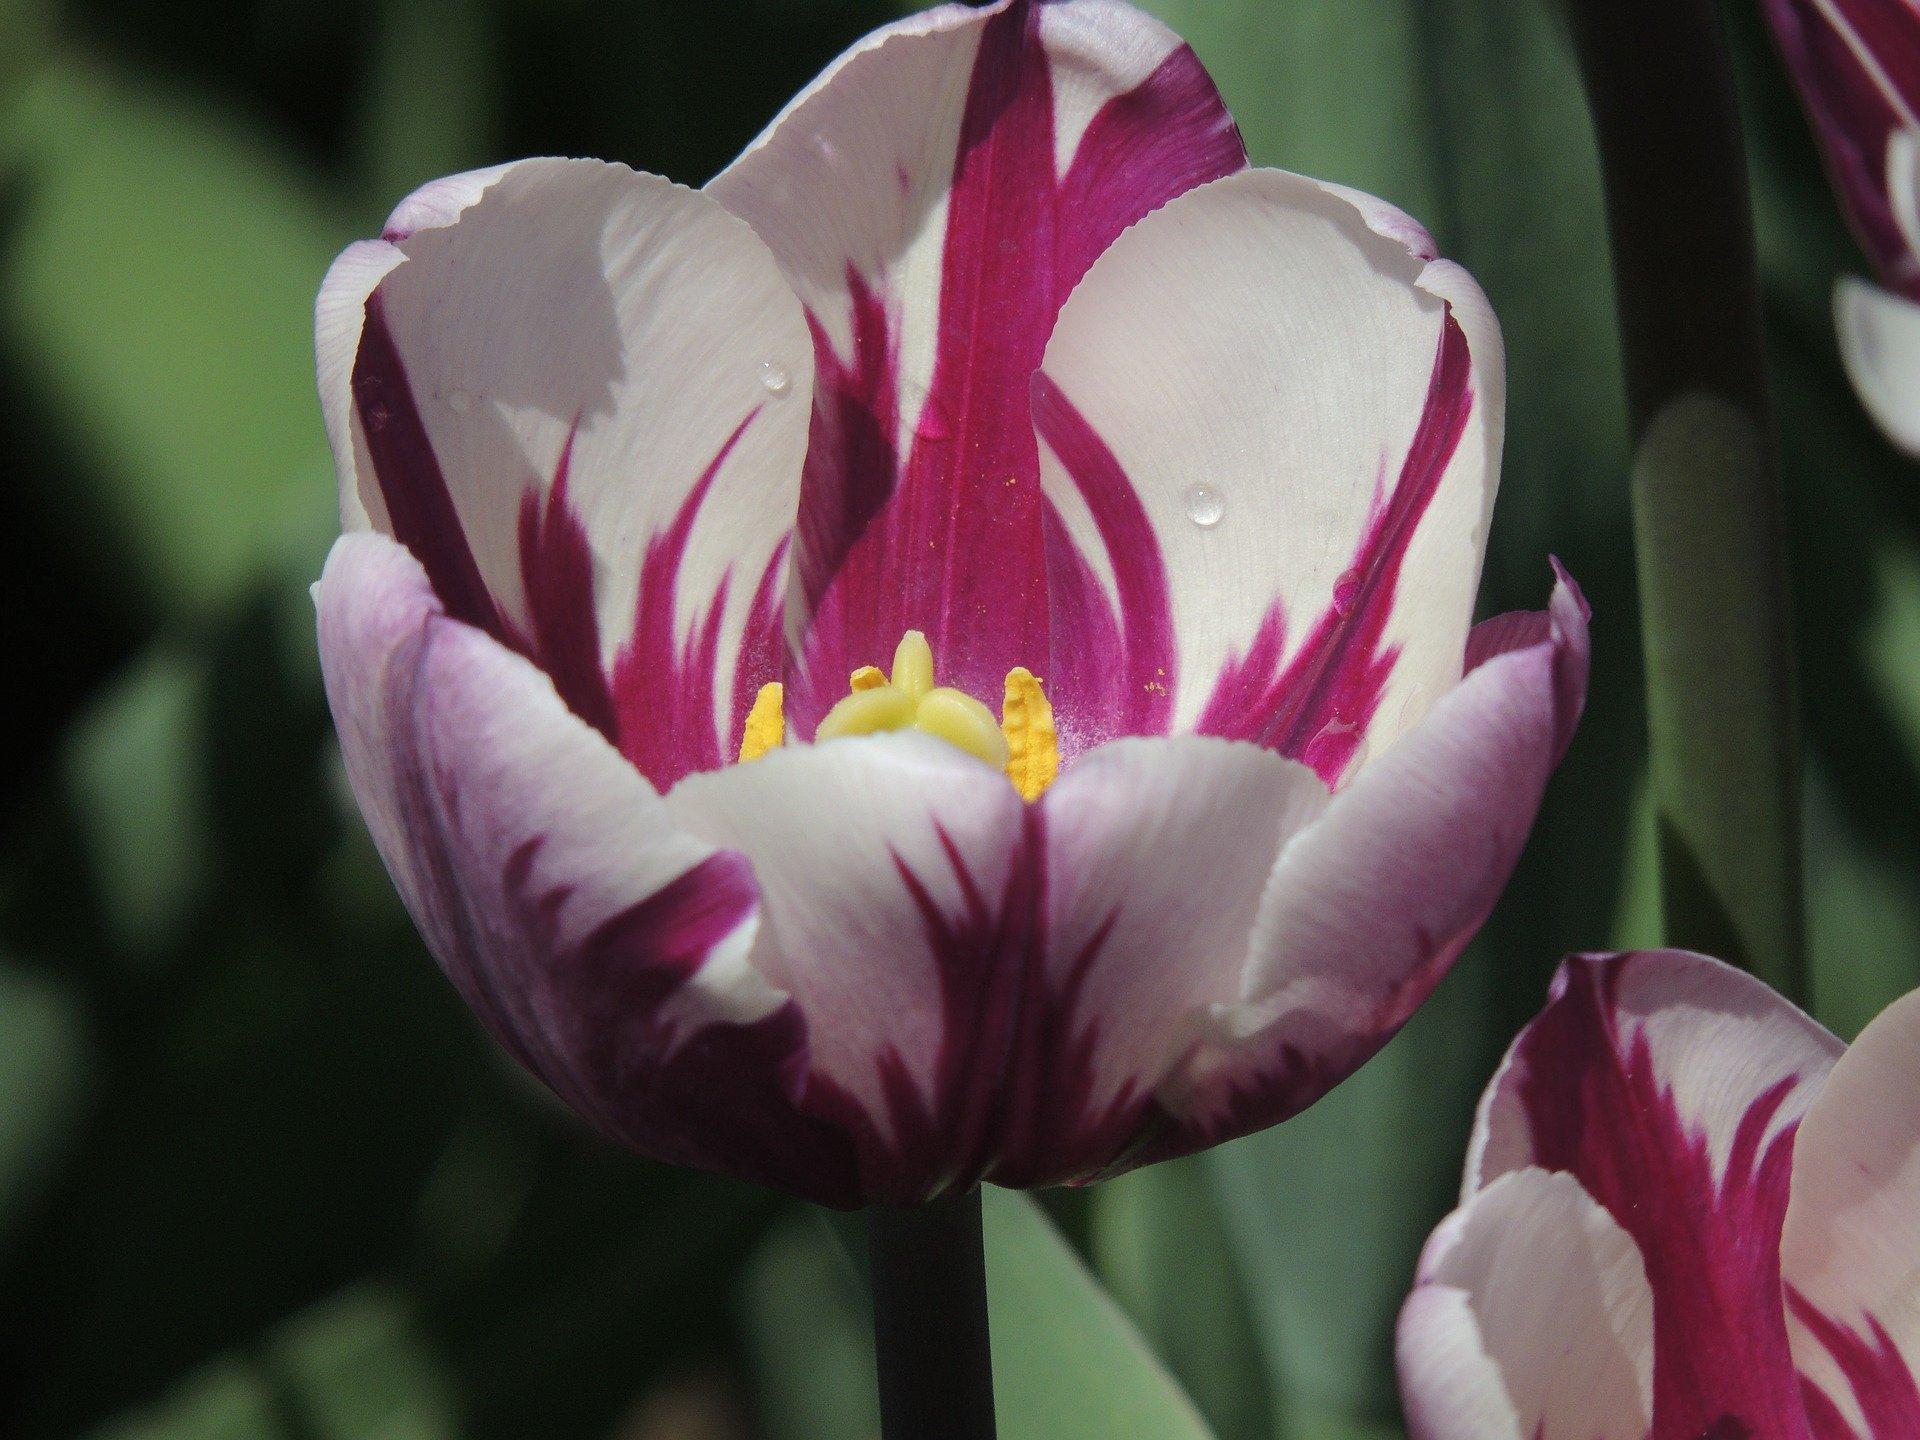 Tulip Triumph 'Blueberry Ripple' - Tulip from Leo Berbee Bulb Company